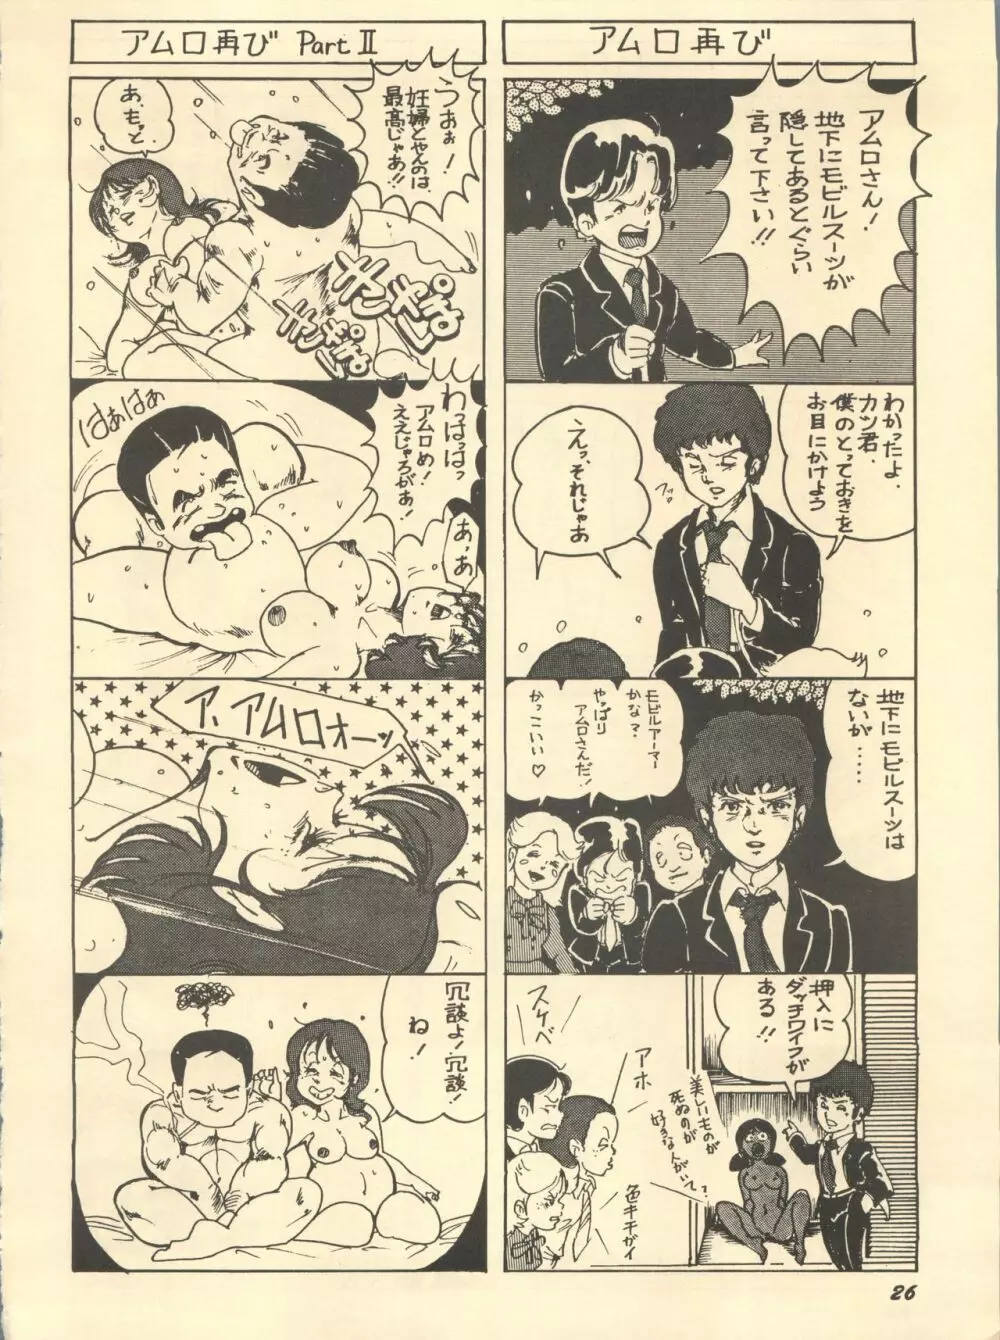 Paろでぃっく2 - page26